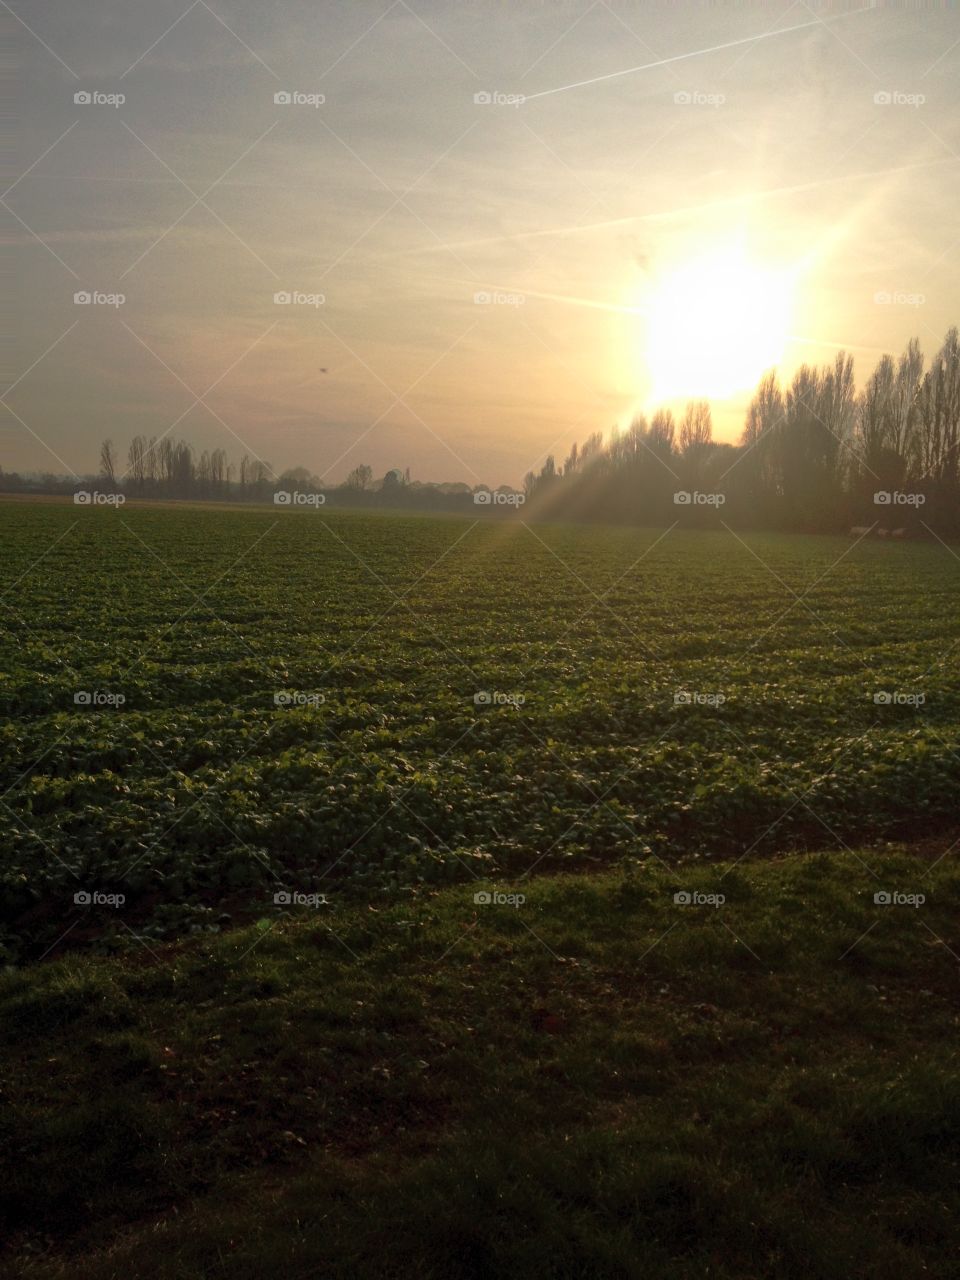 Farming field at sundown